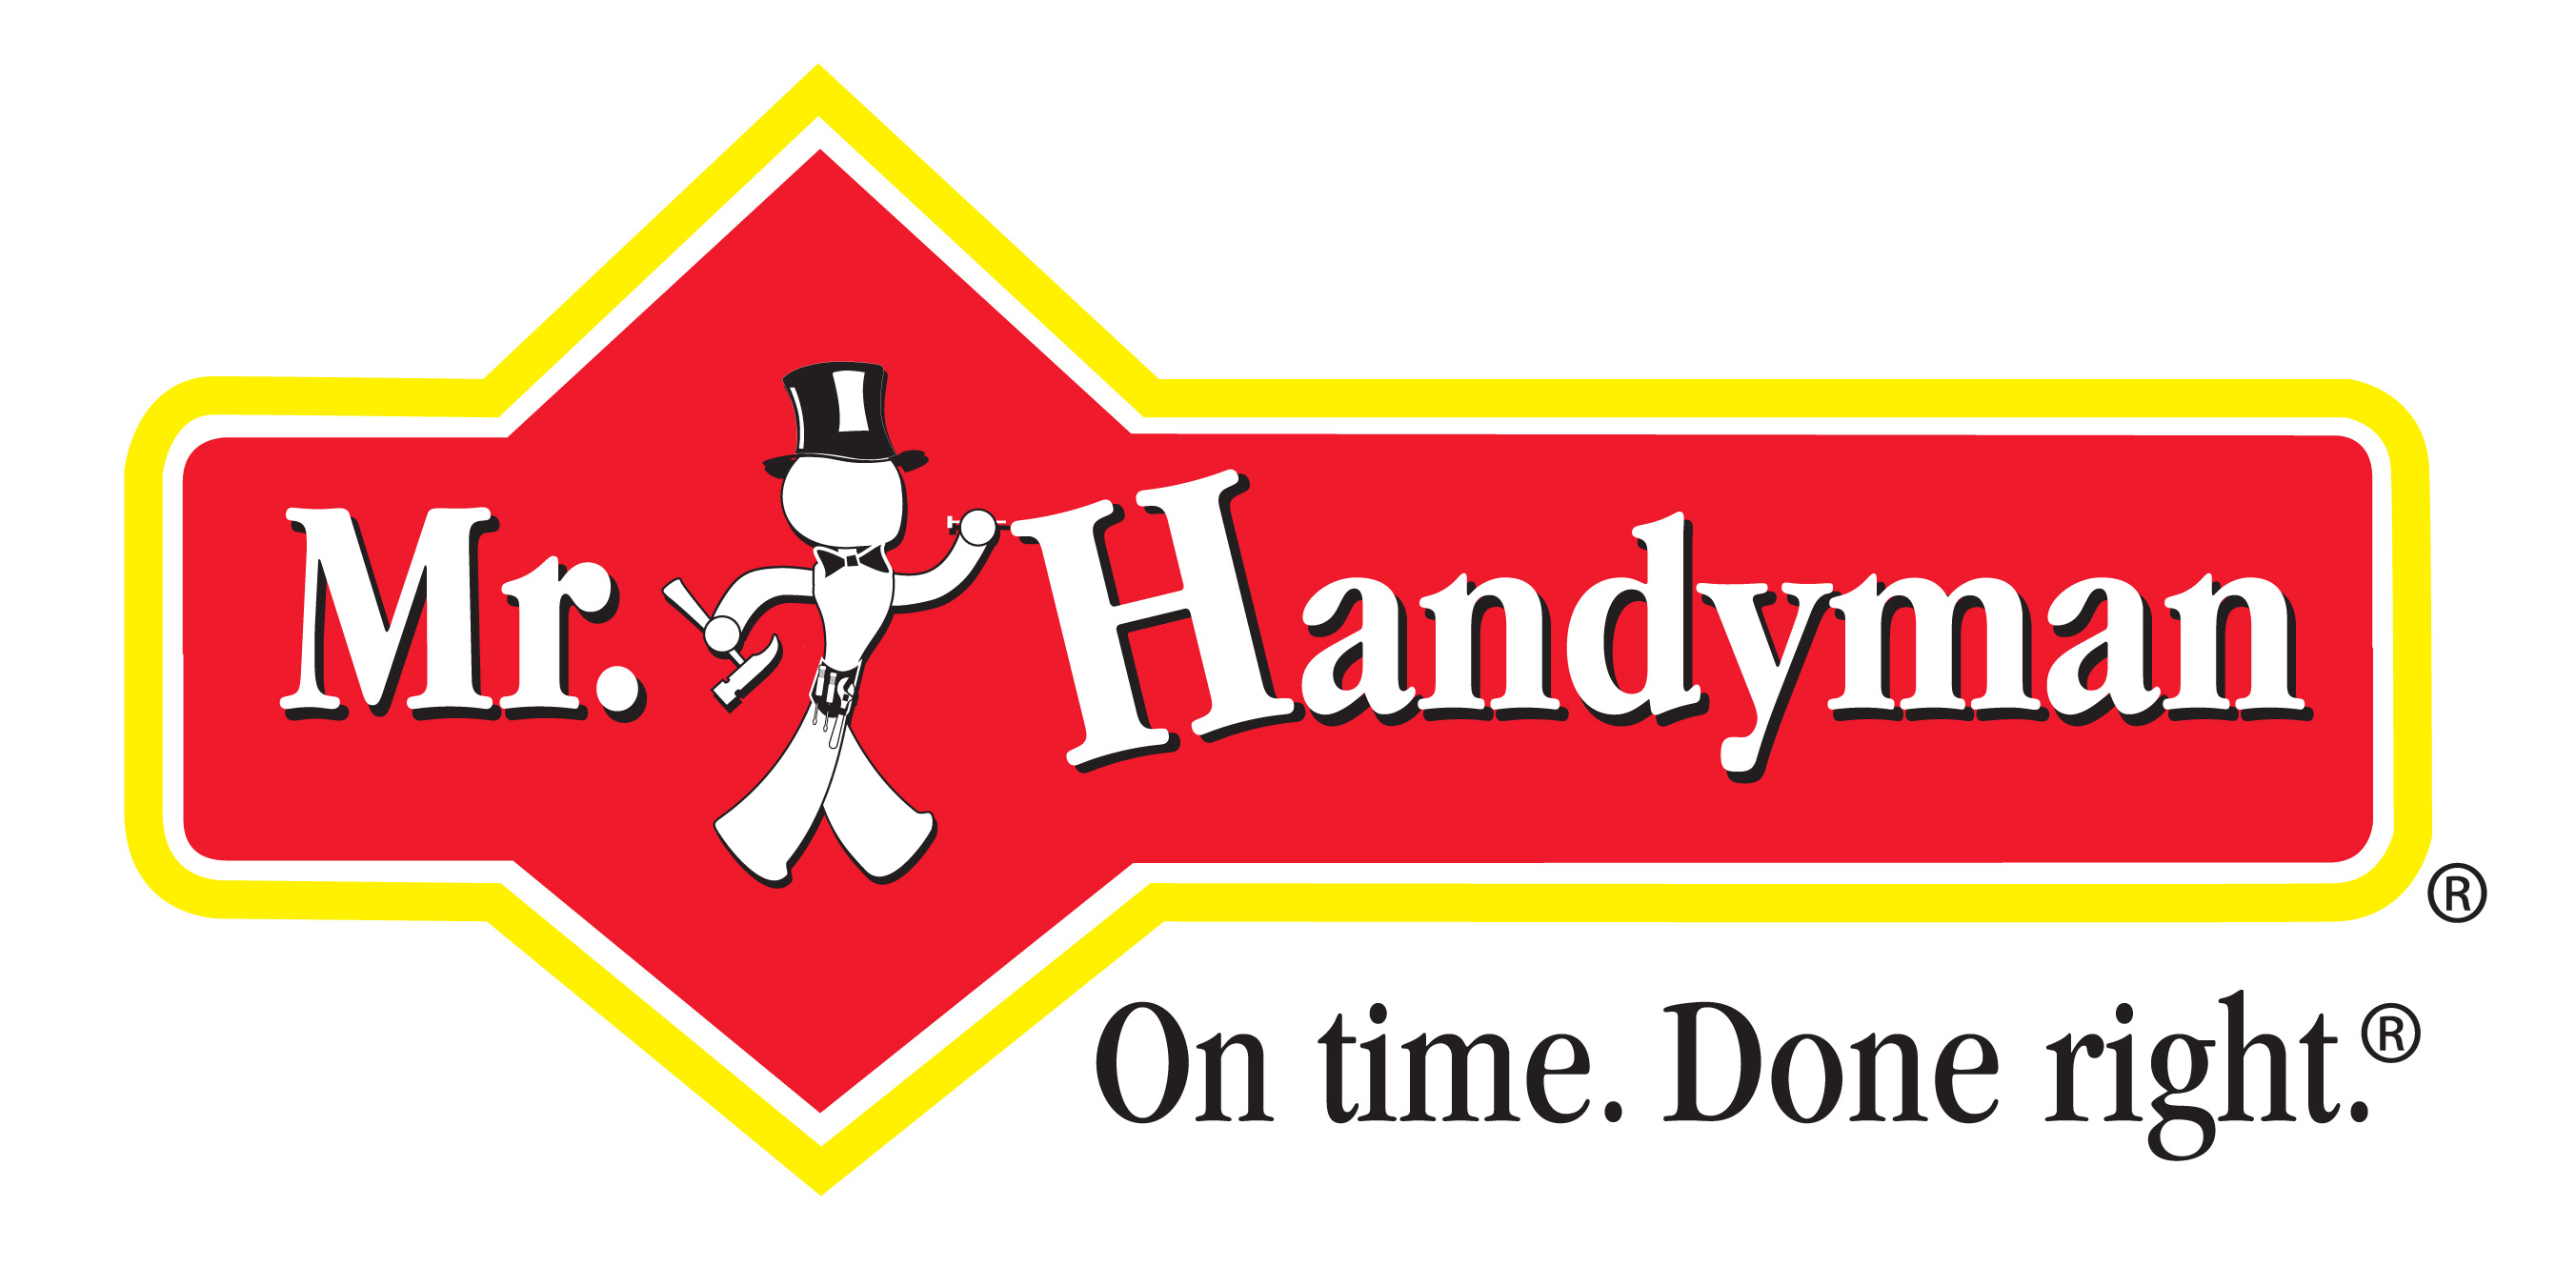 Mr. Handyman serving Greater Jacksonville Logo